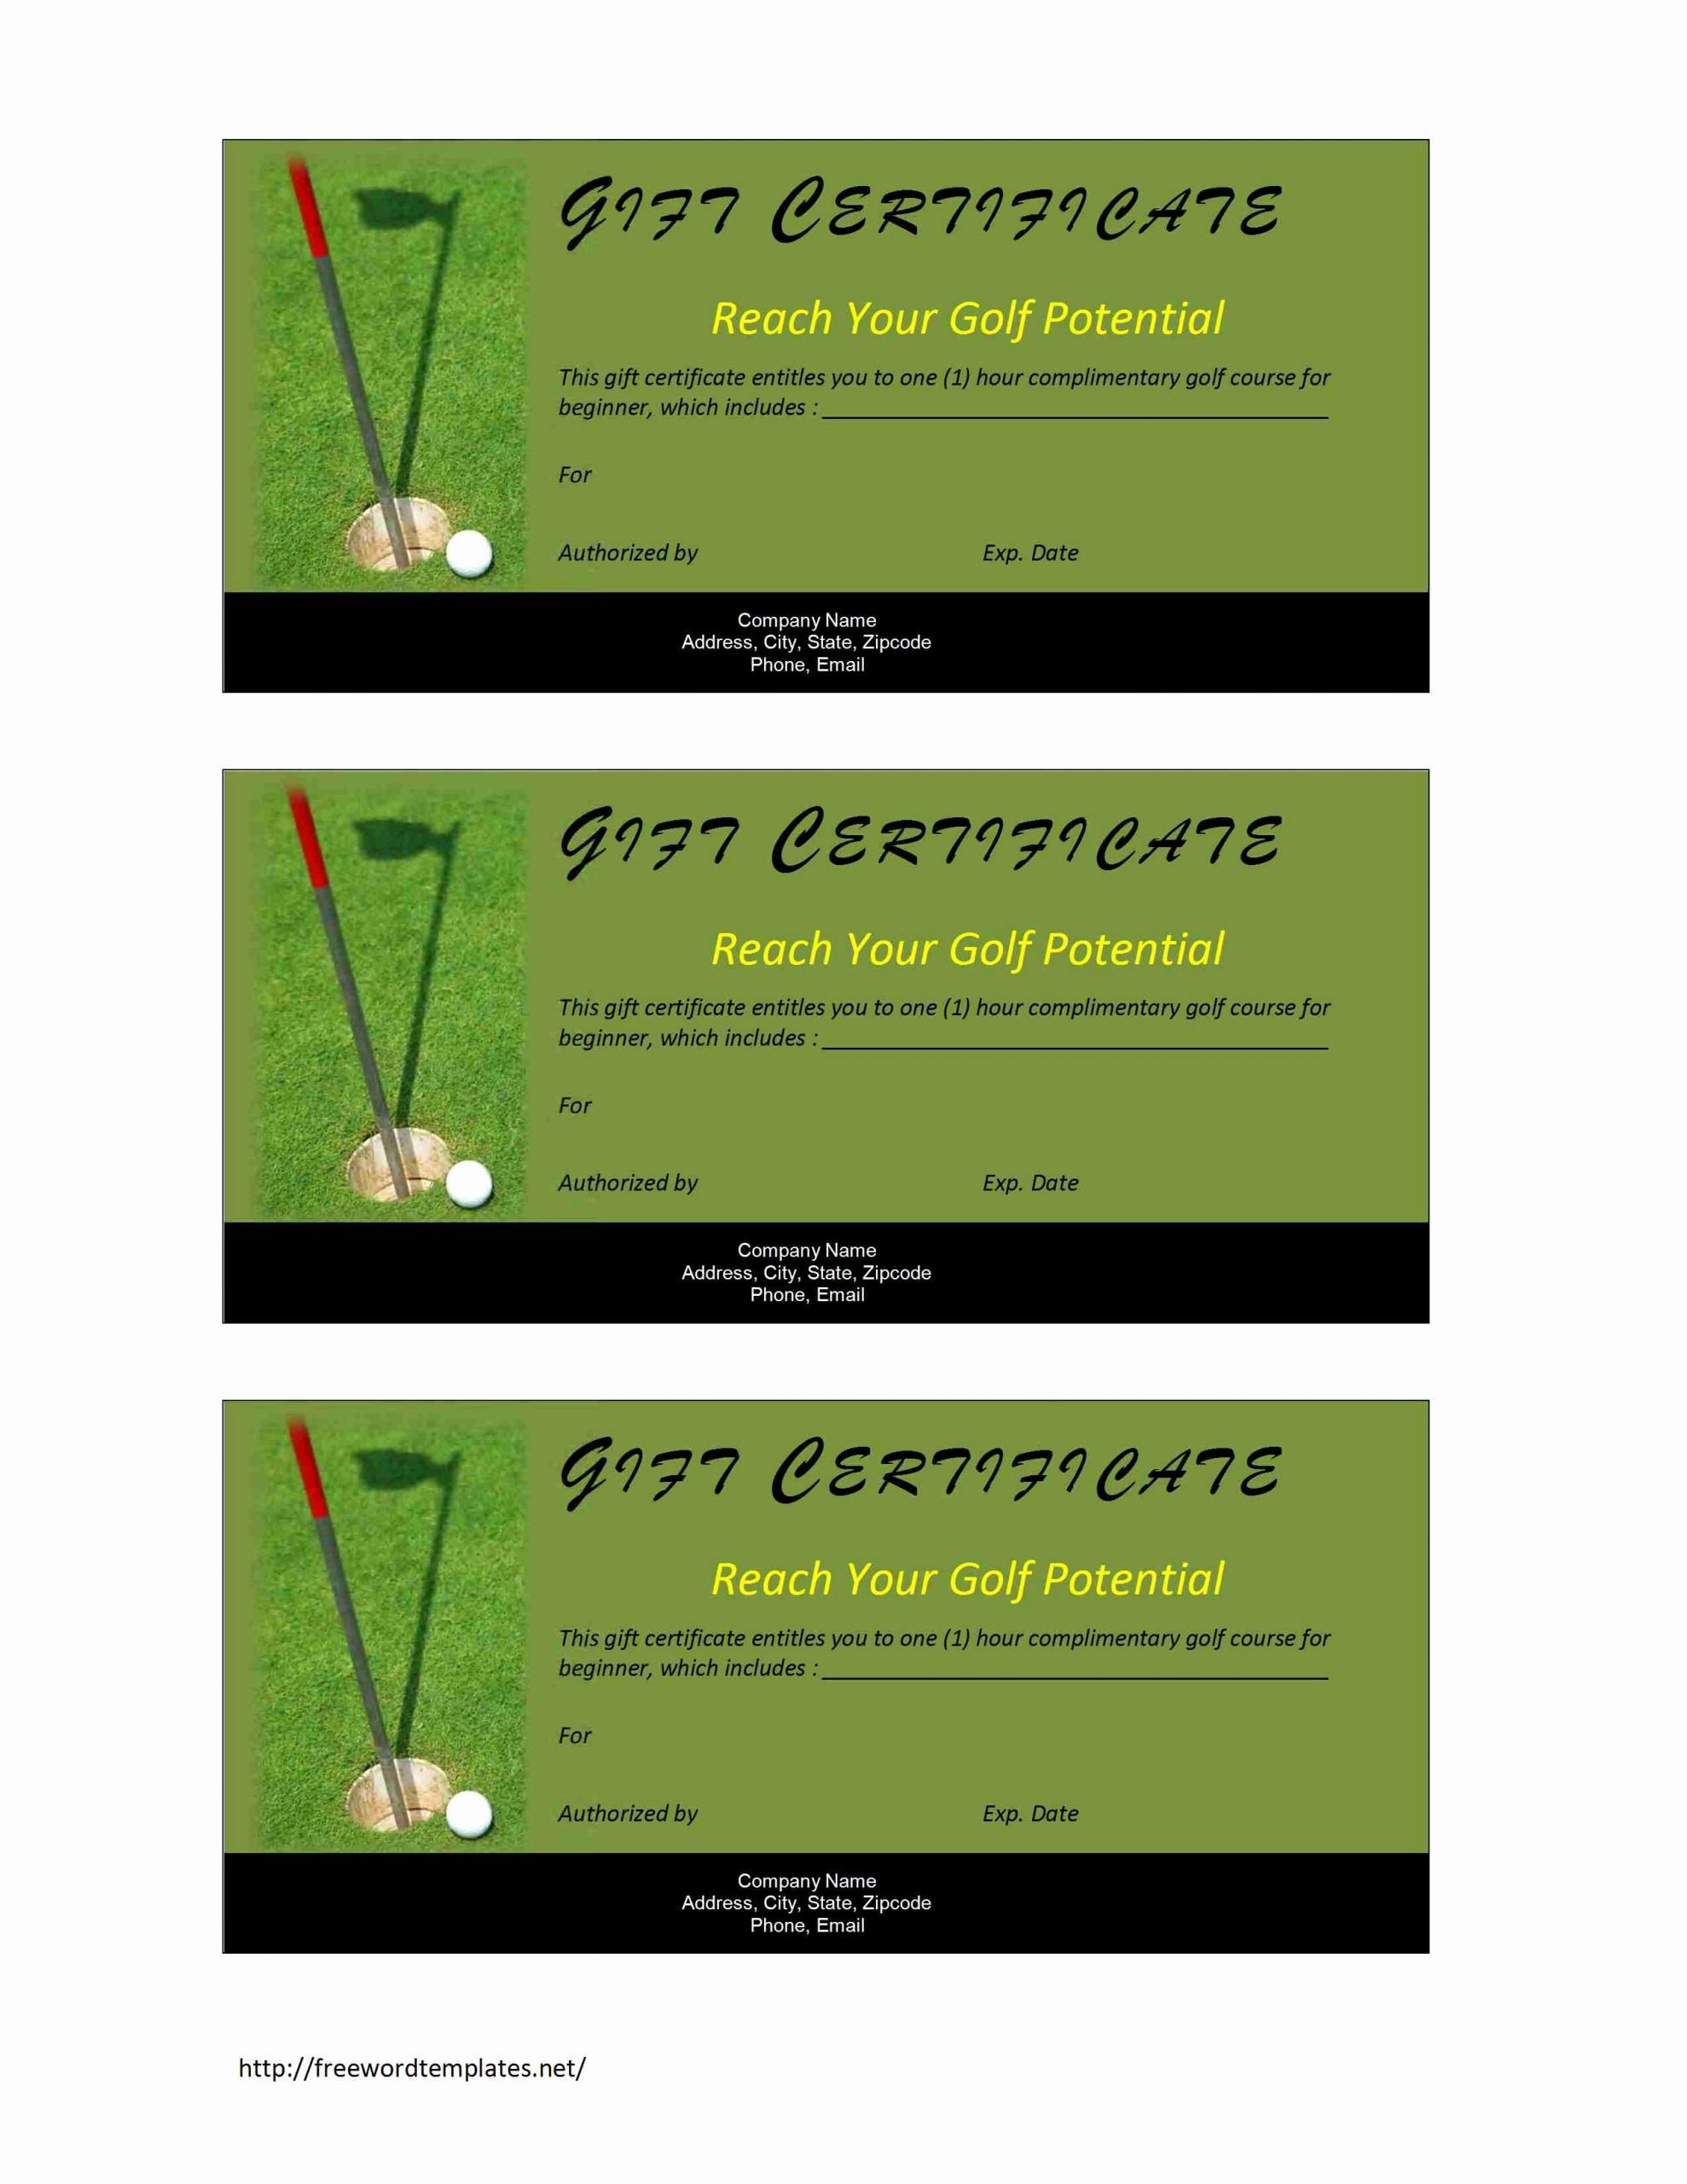 Golf Gift Certificate Template Free Unique Golf Gift Certificate